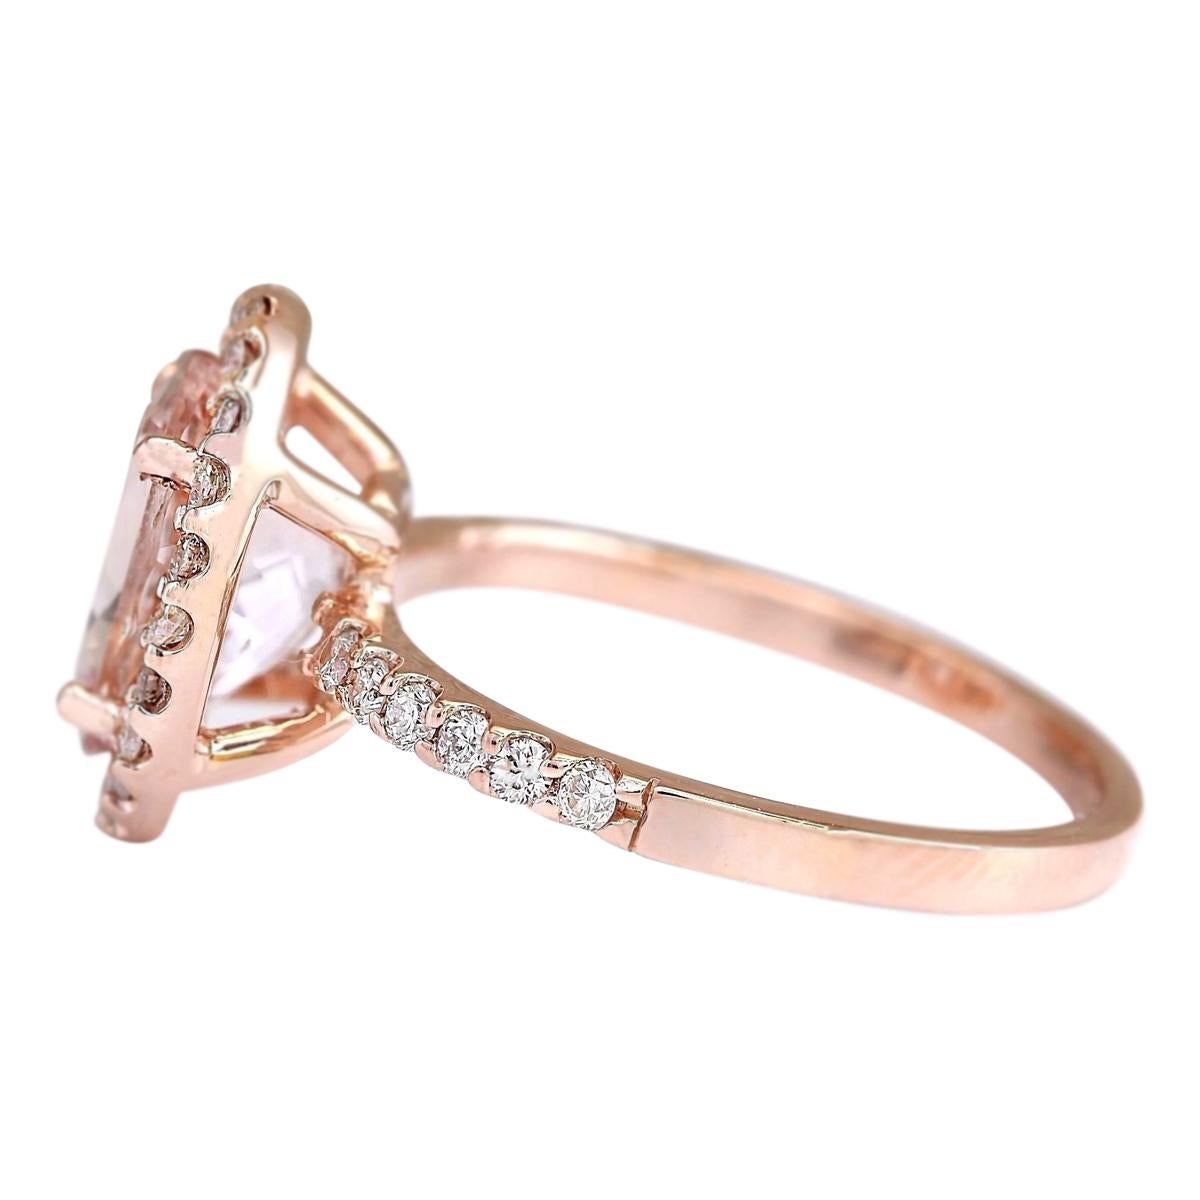 Stamped: 14K Rose Gold
Total Ring Weight: 3.7 Grams
Total Natural Morganite Weight is 2.07 Carat (Measures: 10.00x8.00 mm)
Color: Peach
Total Natural Diamond Weight is 0.60 Carat
Color: F-G, Clarity: VS2-SI1
Face Measures: 13.60x11.40 mm
Sku: